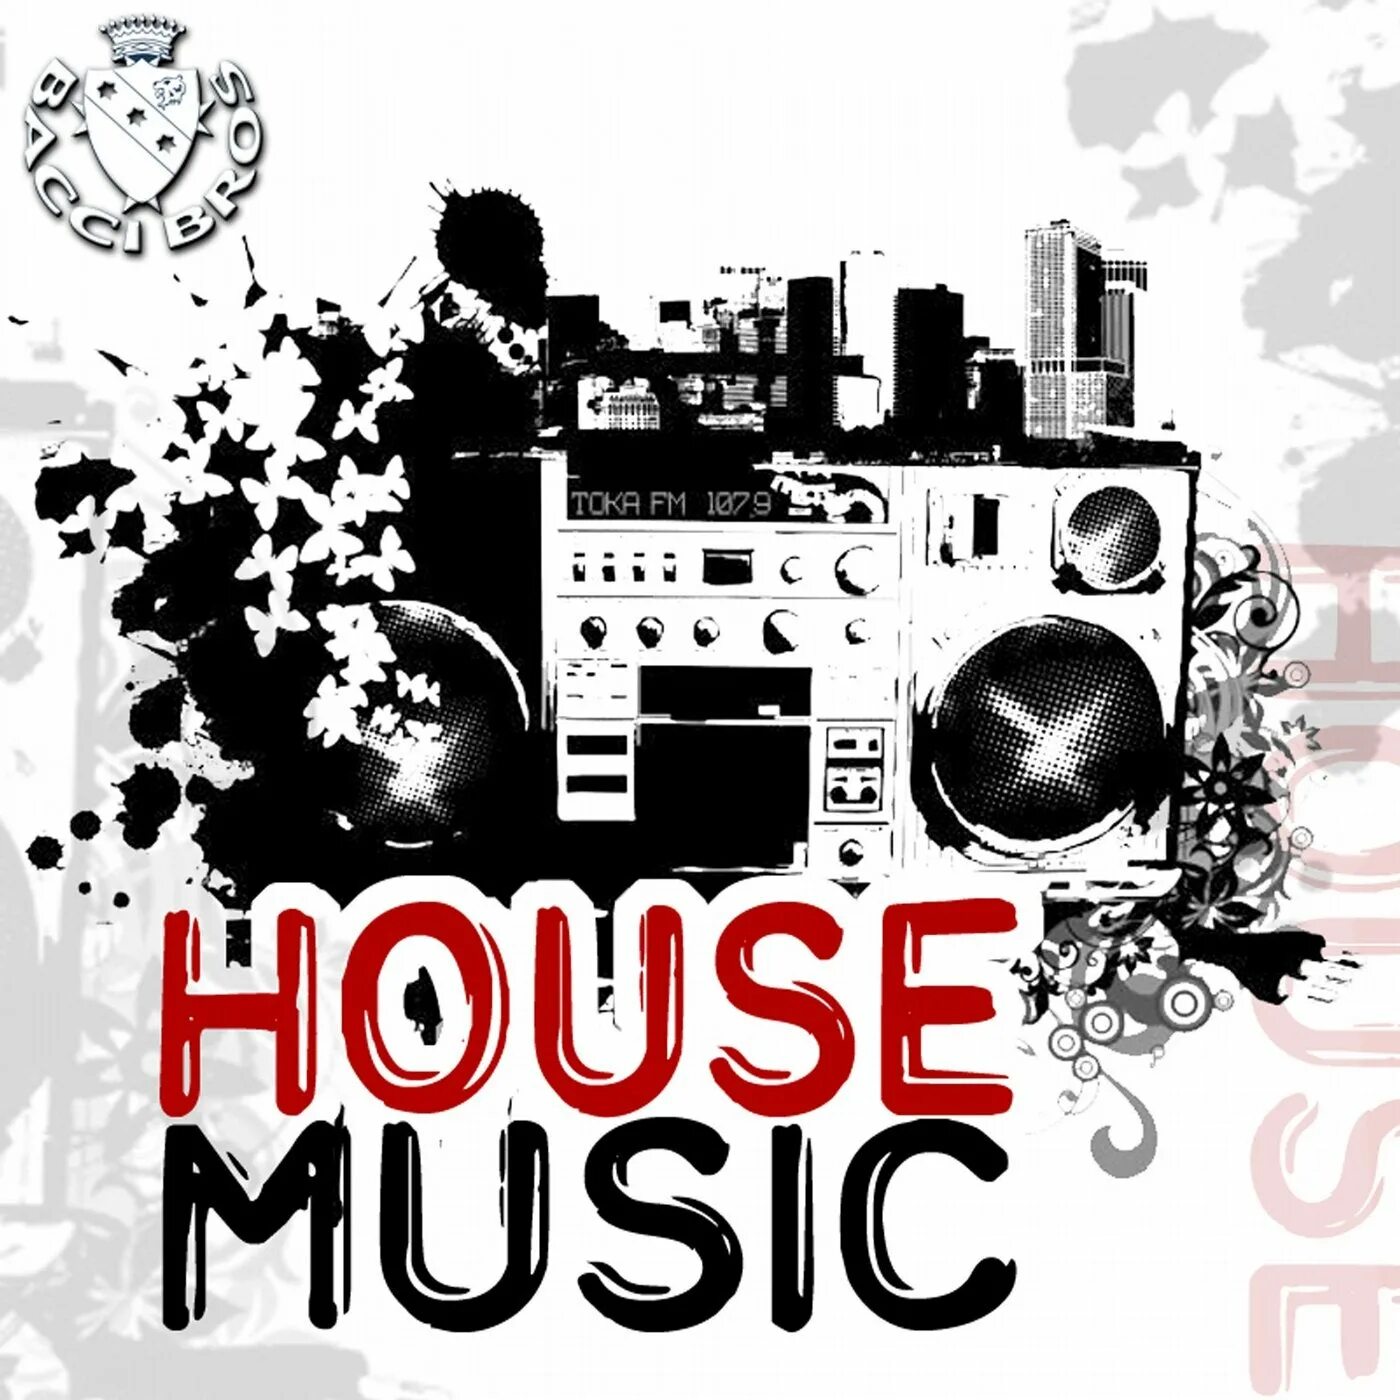 Музыкальный стиль House. House Music картинки. Хаус Жанр. Музыкальный стиль Хаус в рисунках. Песня me house